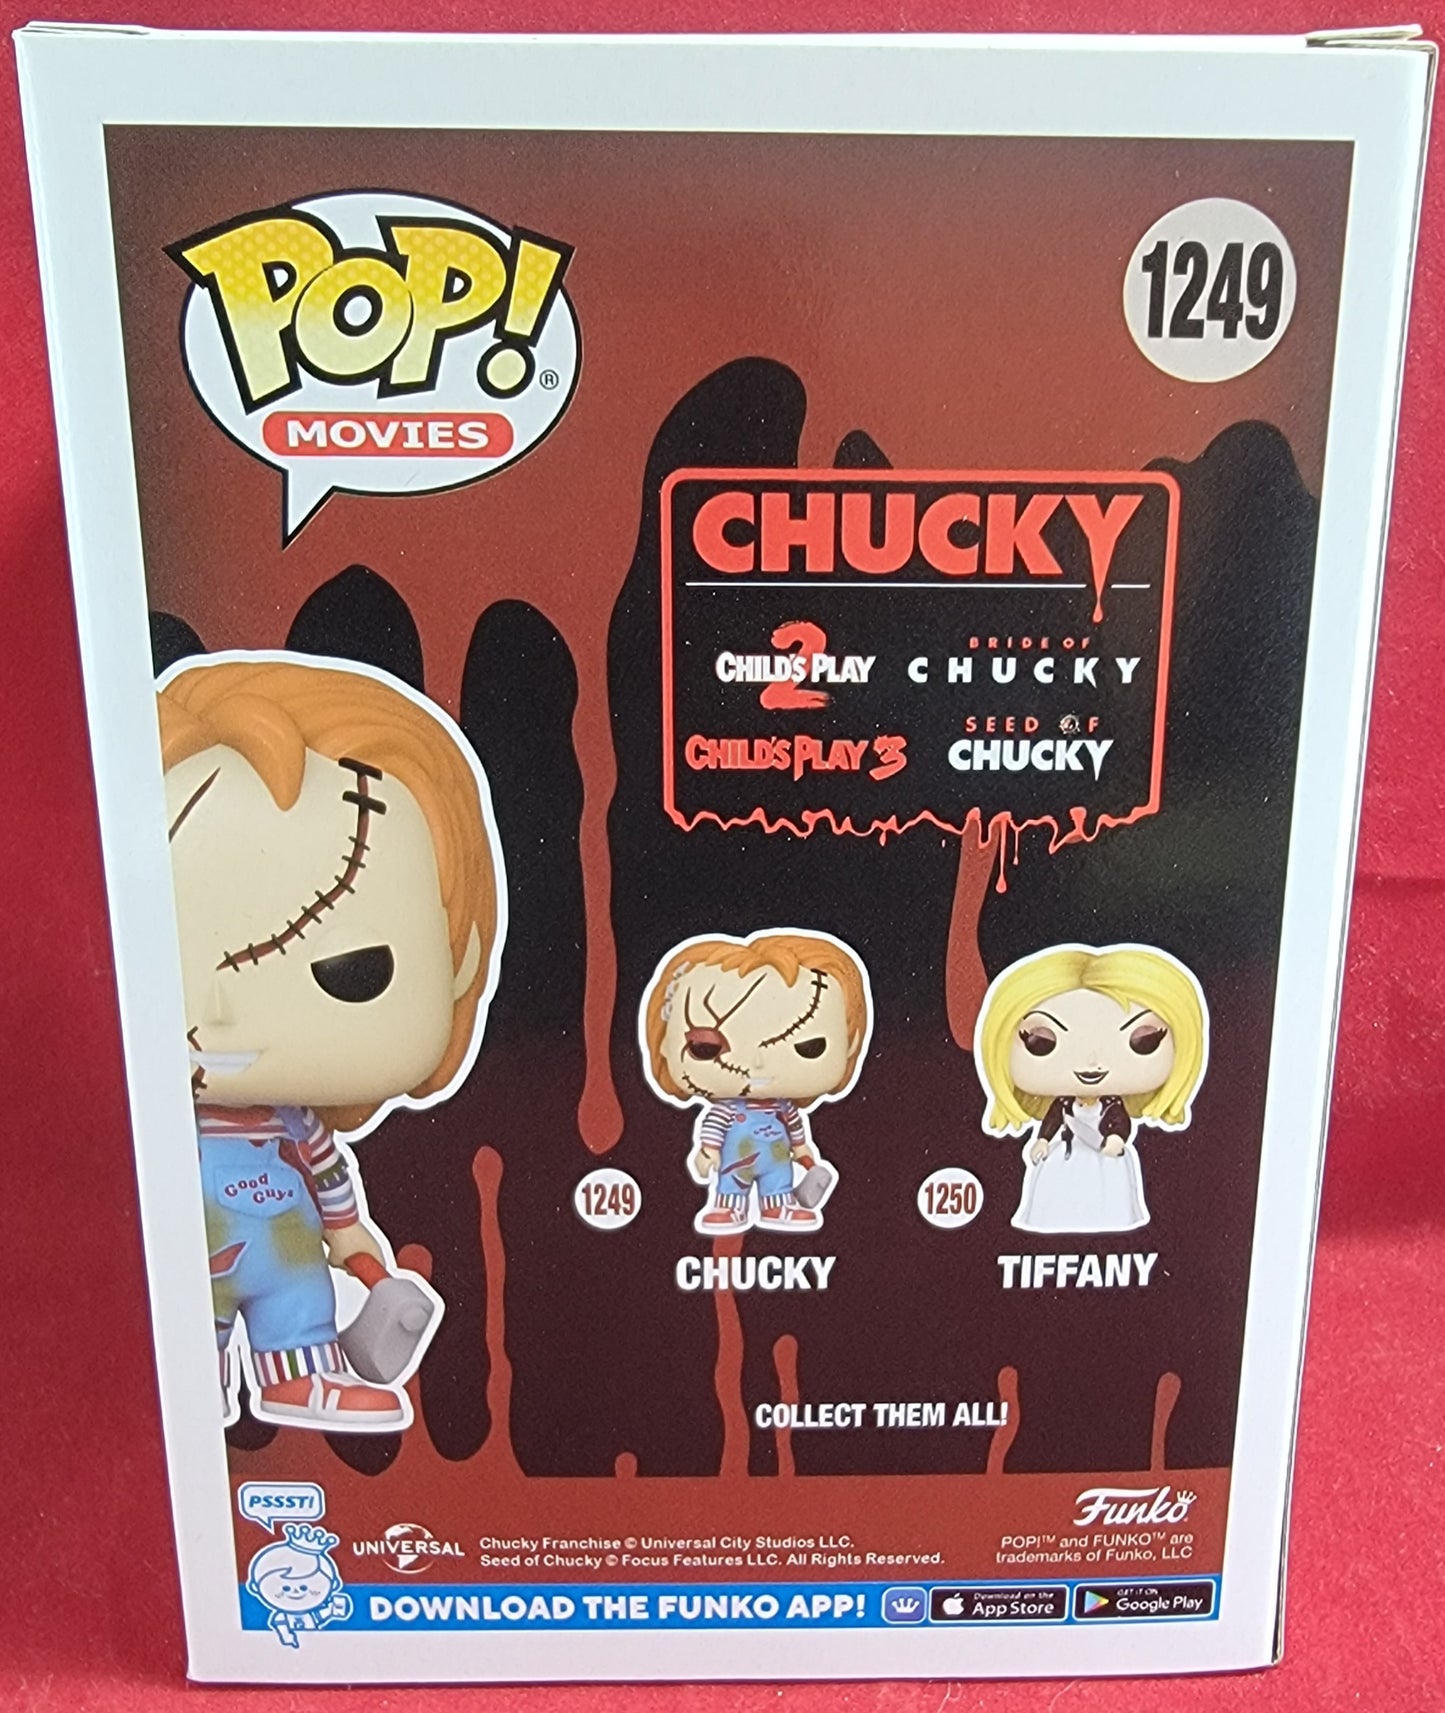 Chucky funko # 1249 (nib)
With pop protector